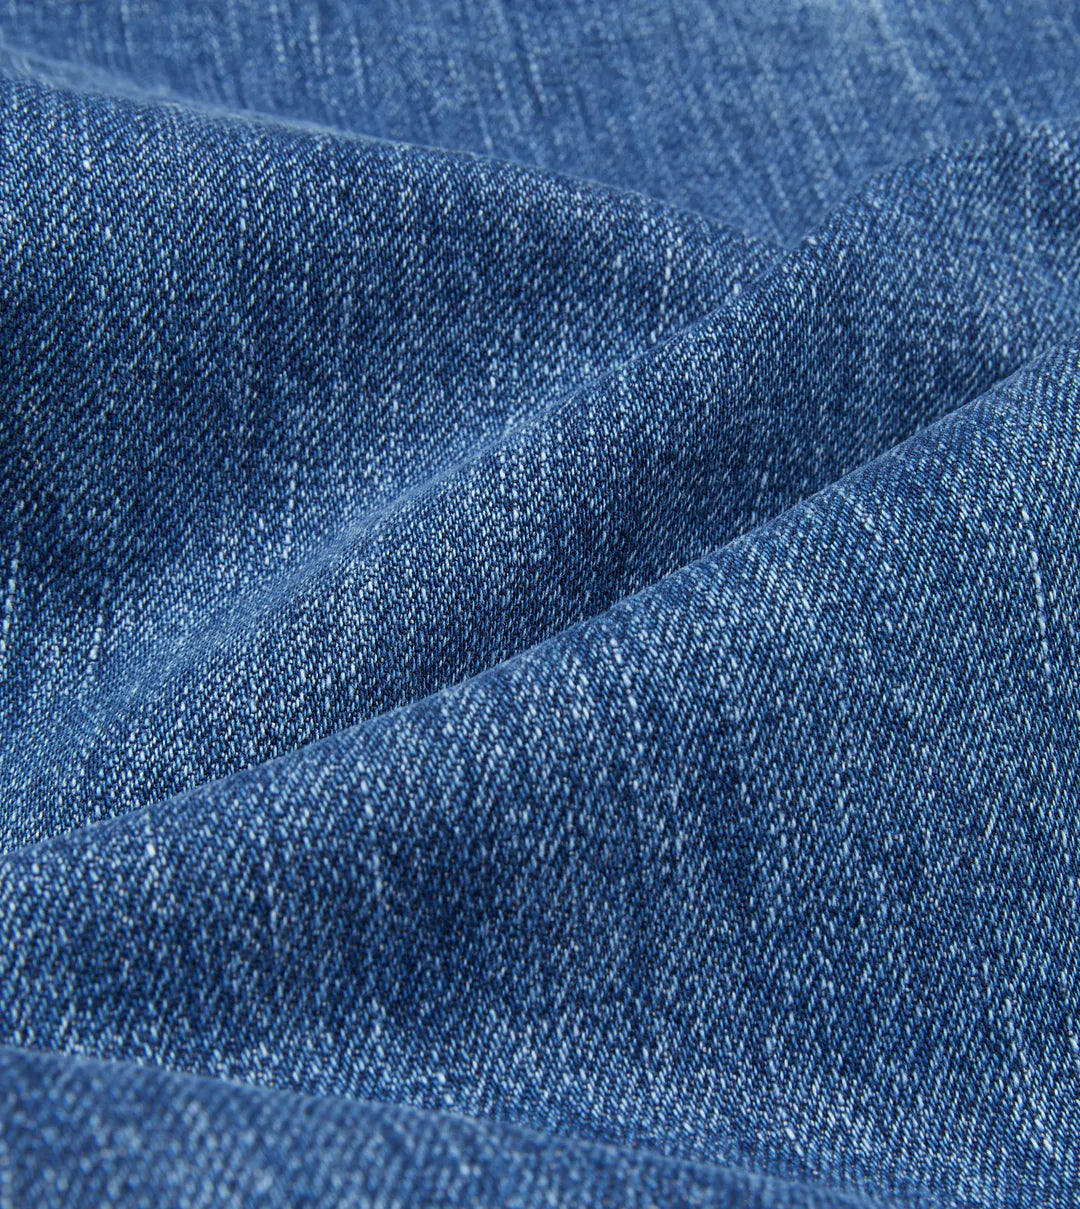 14.2oz Japanese Selvedge Denim Five-Pocket Jeans - Bleach Wash